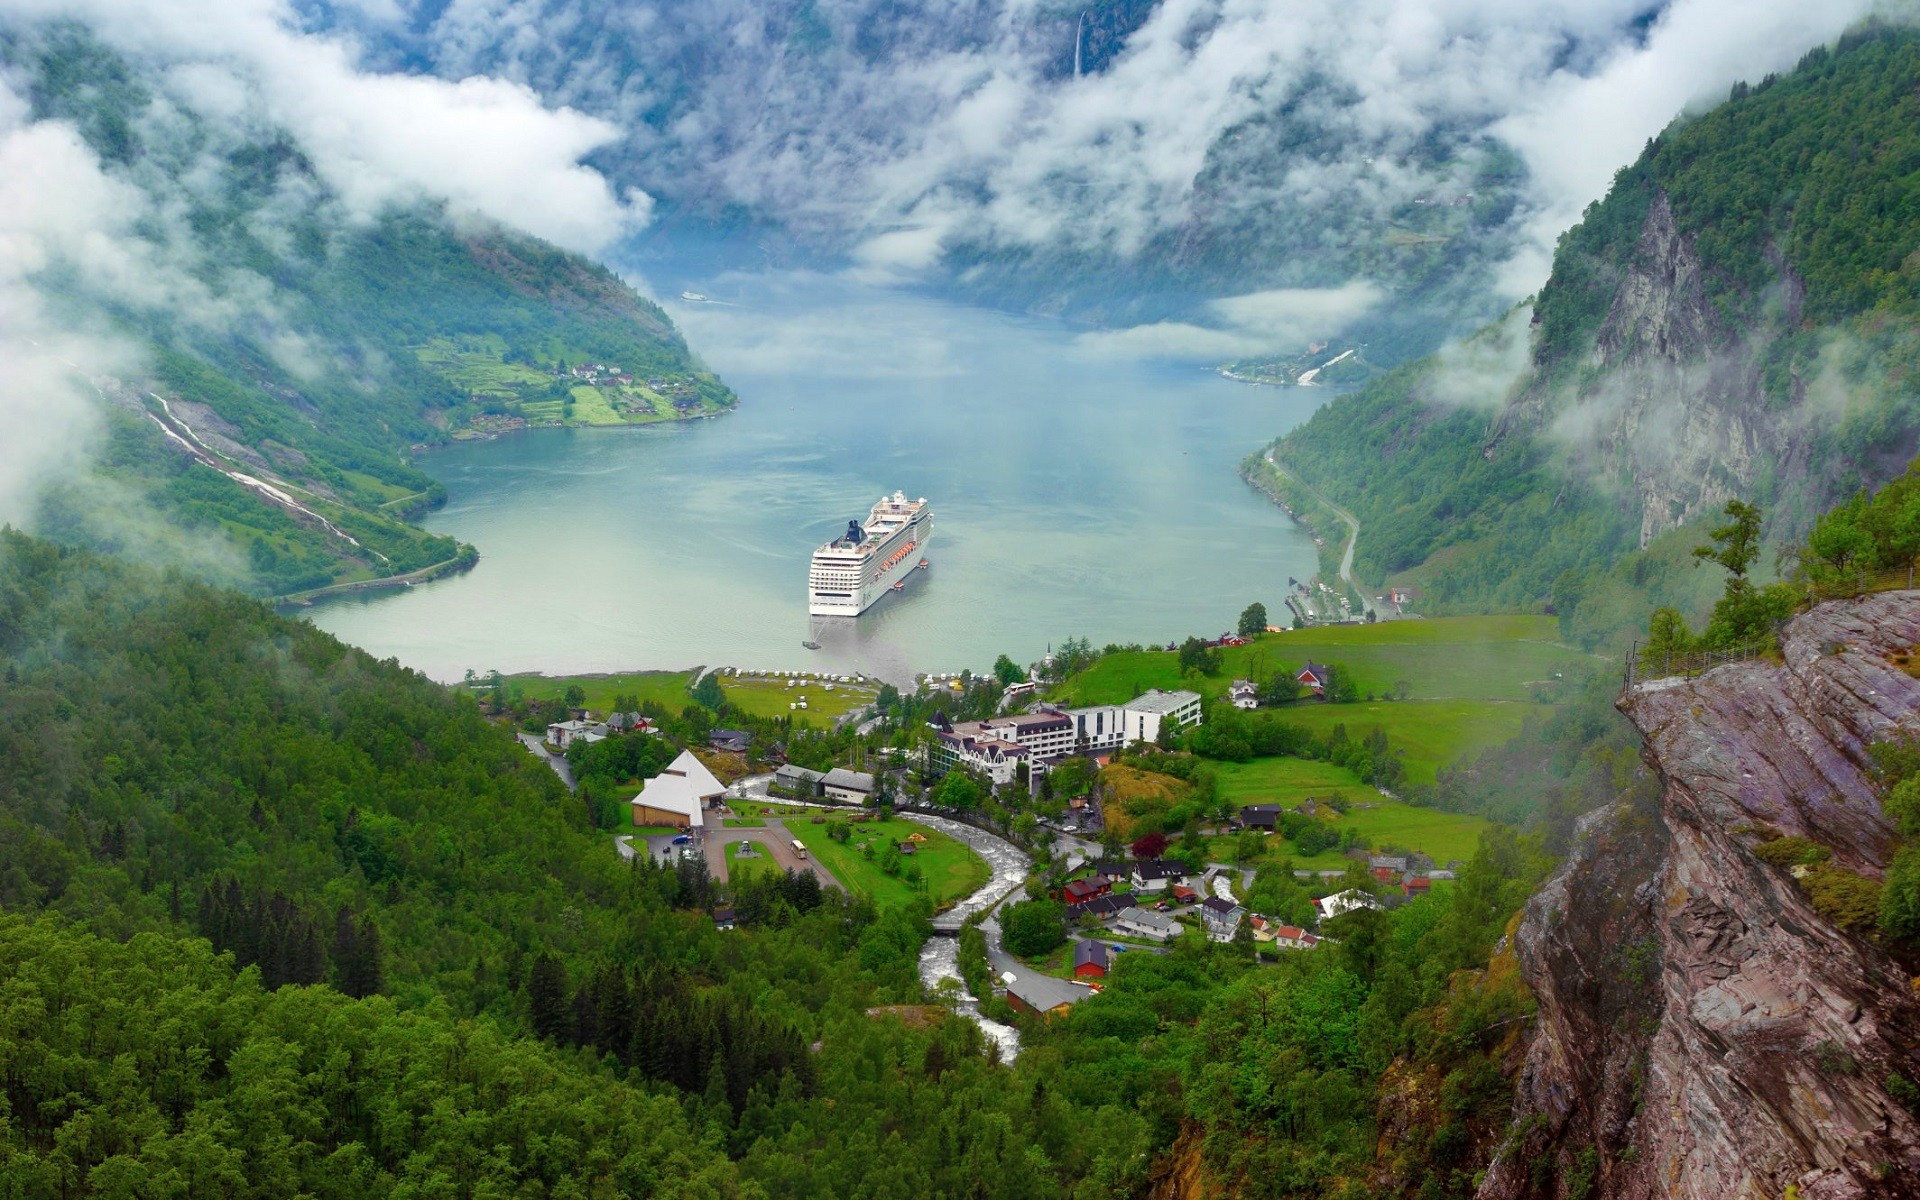 Cruise Ship near Norwegian Village